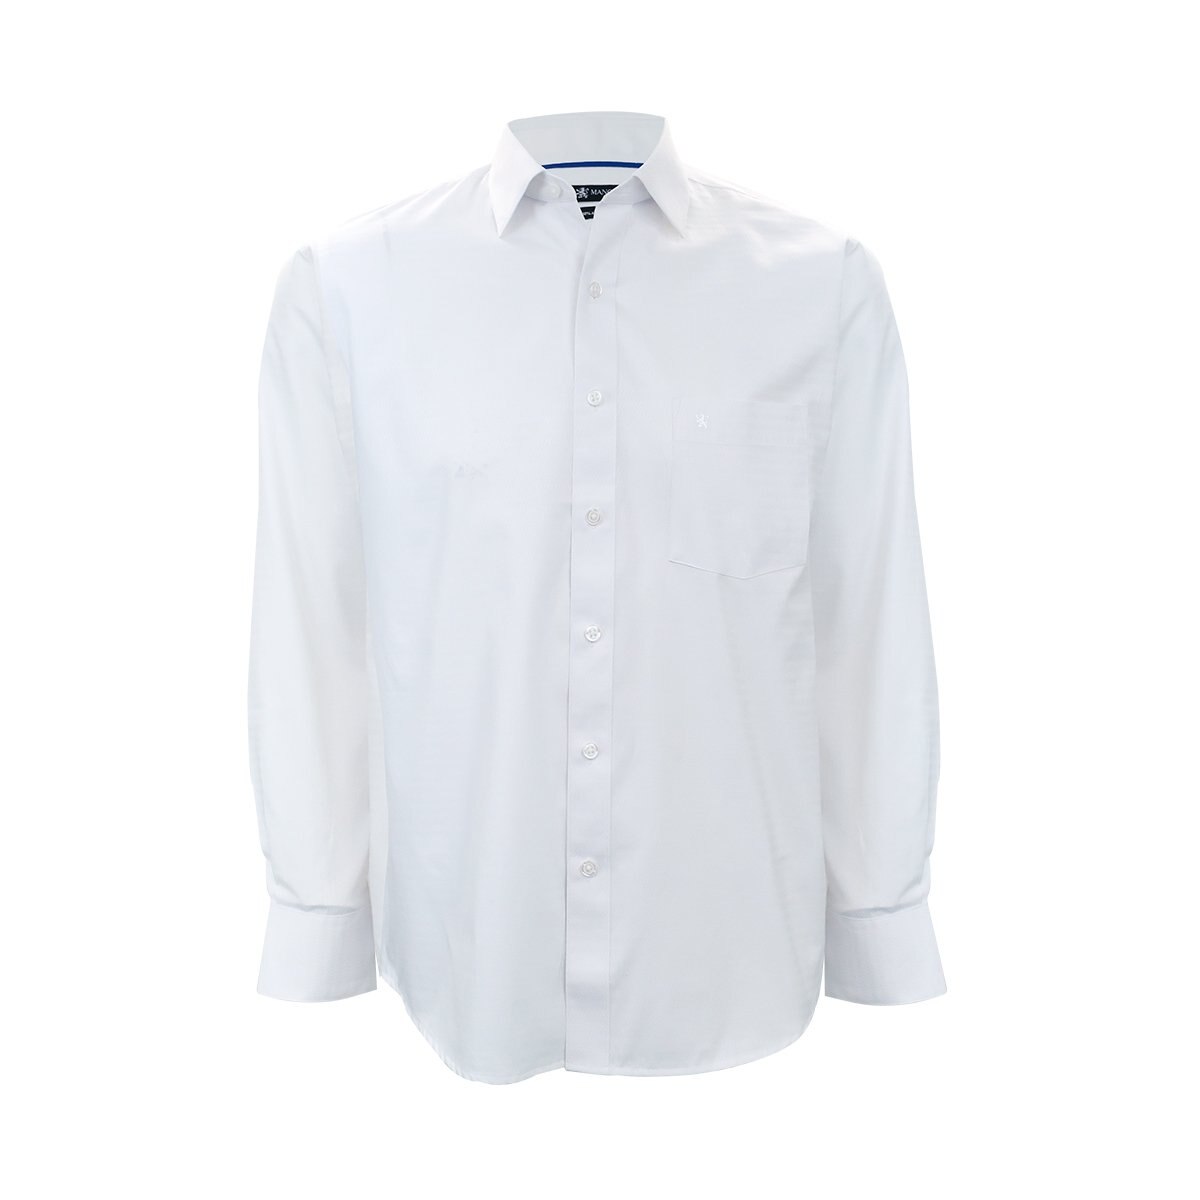 Camisa de vestir lisa blanco para caballero manchester - Sears